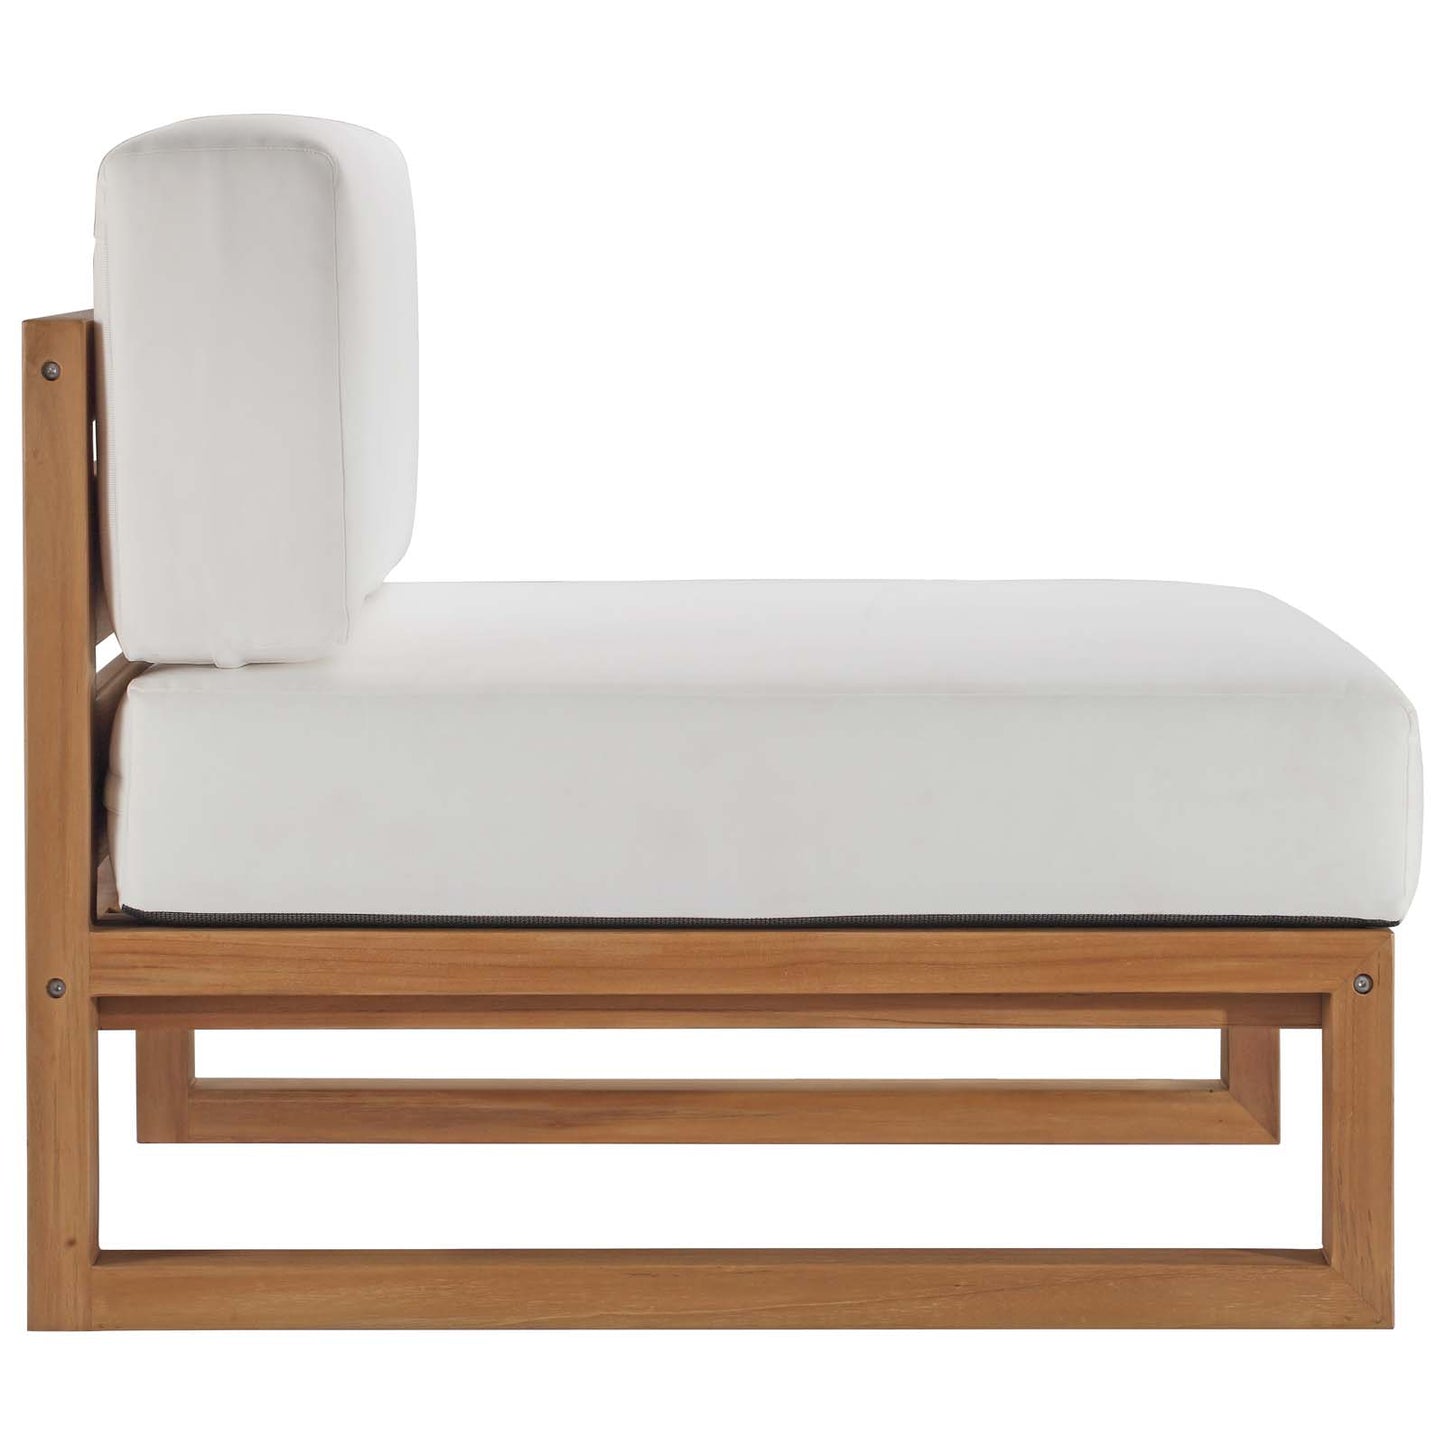 Upland Outdoor Patio Teak Wood 4-Piece Furniture Set Natural White EEI-4257-NAT-WHI-SET